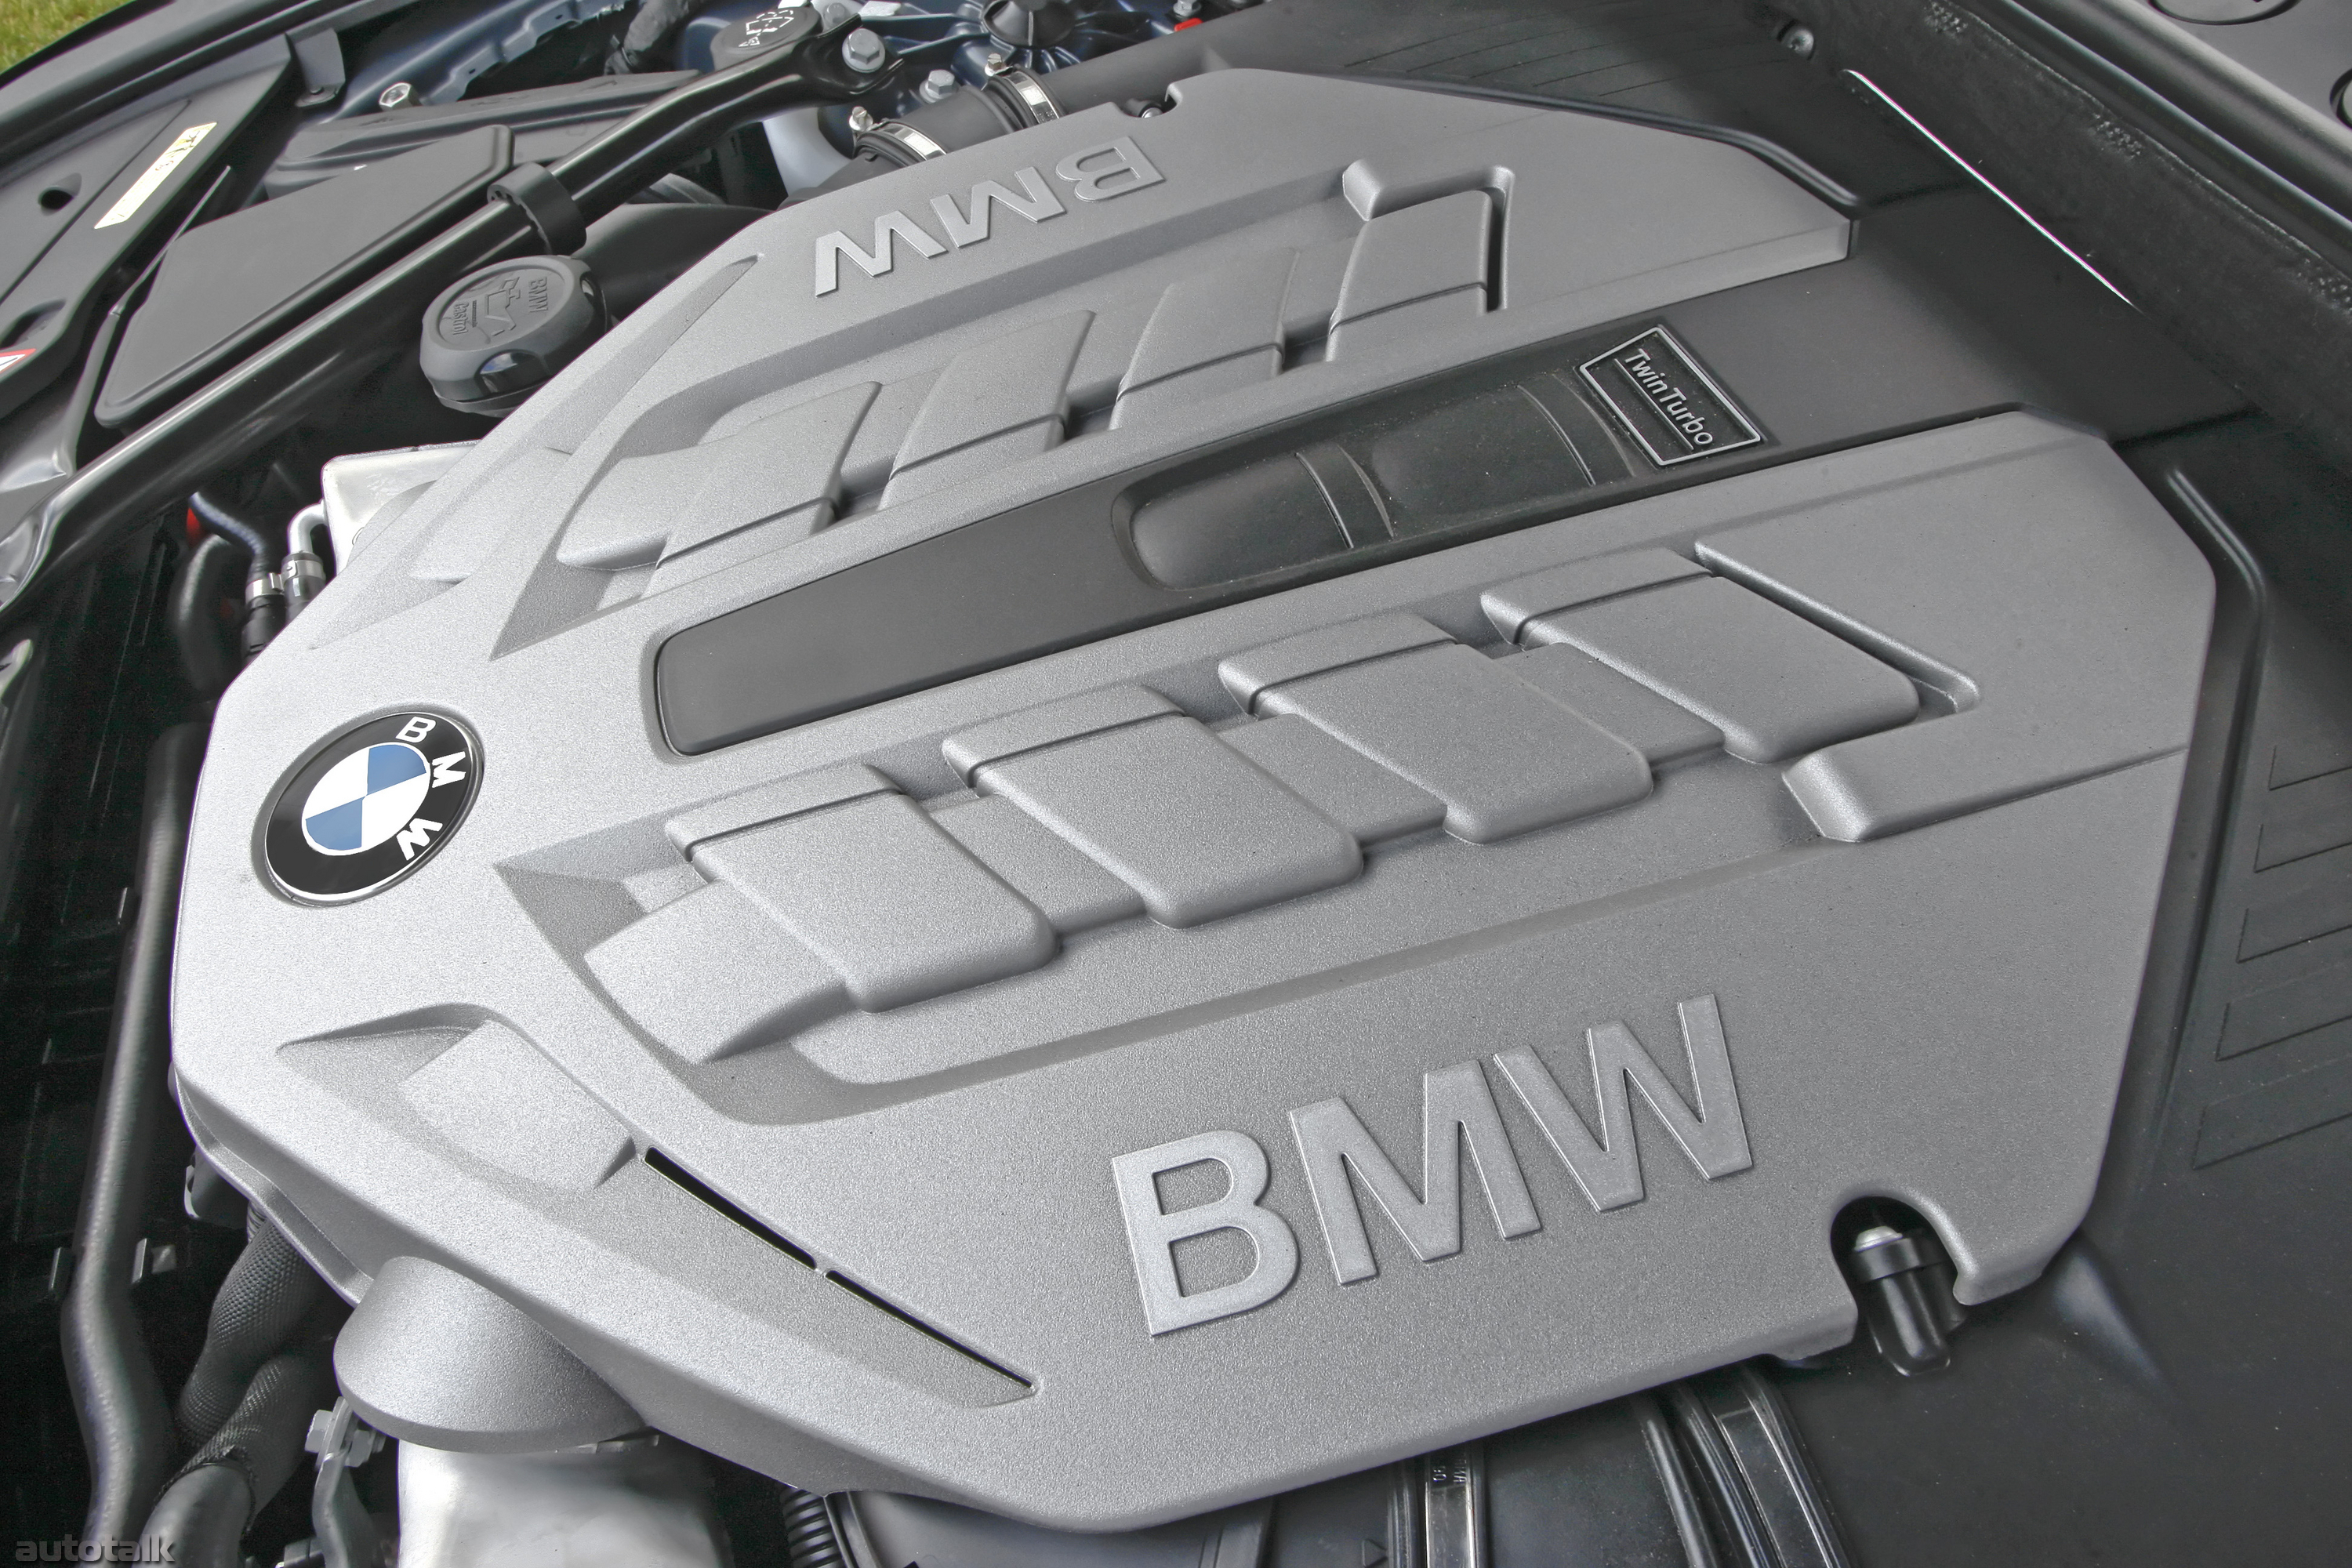 2010 BMW 5 Series GT